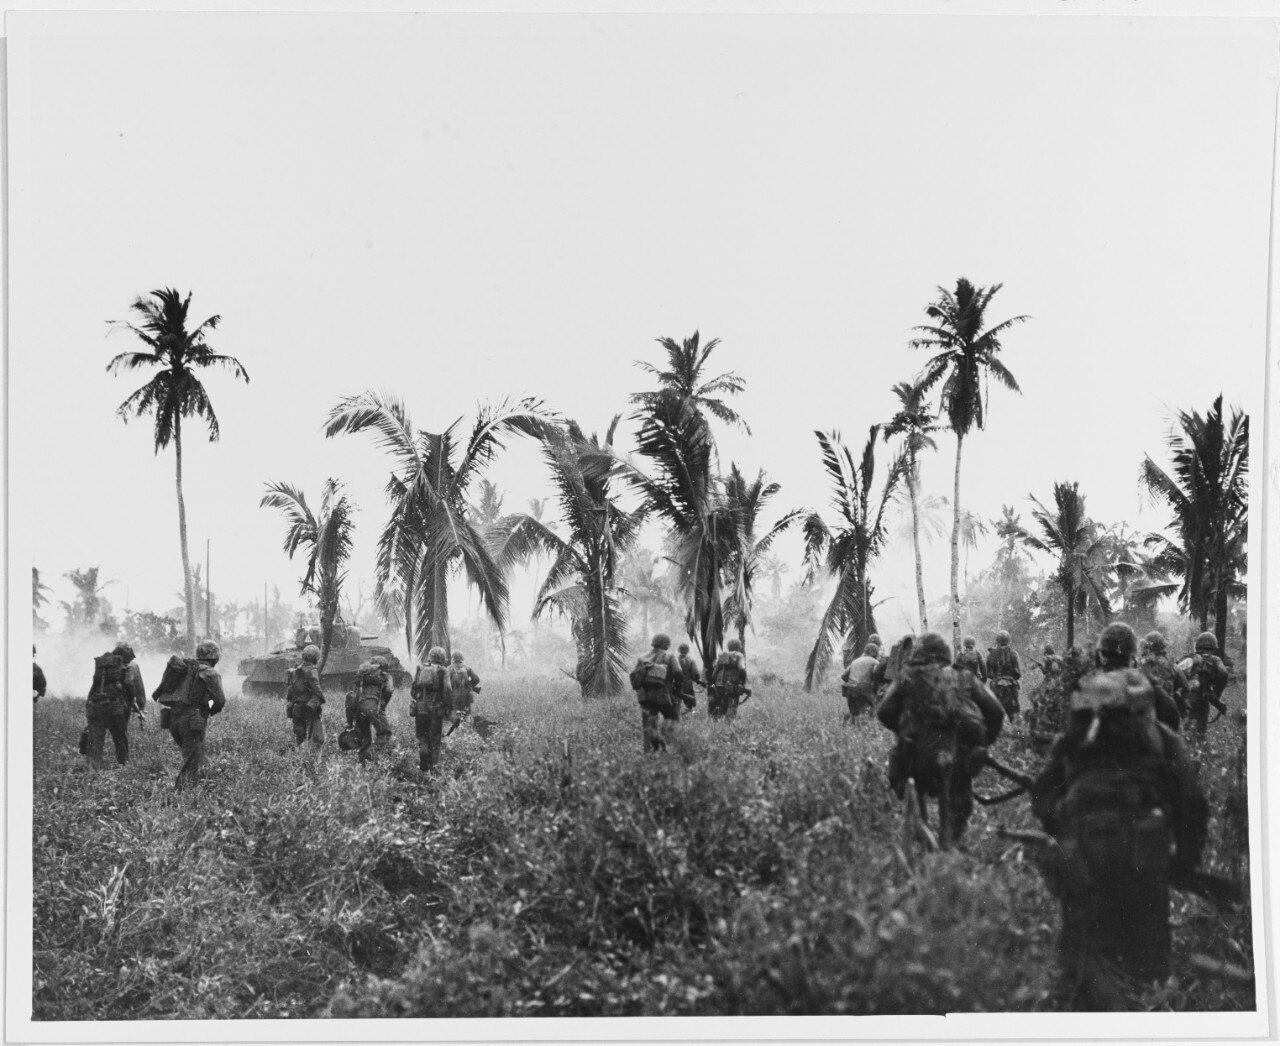 Several men and a tank push through an overgrown field near palm trees.